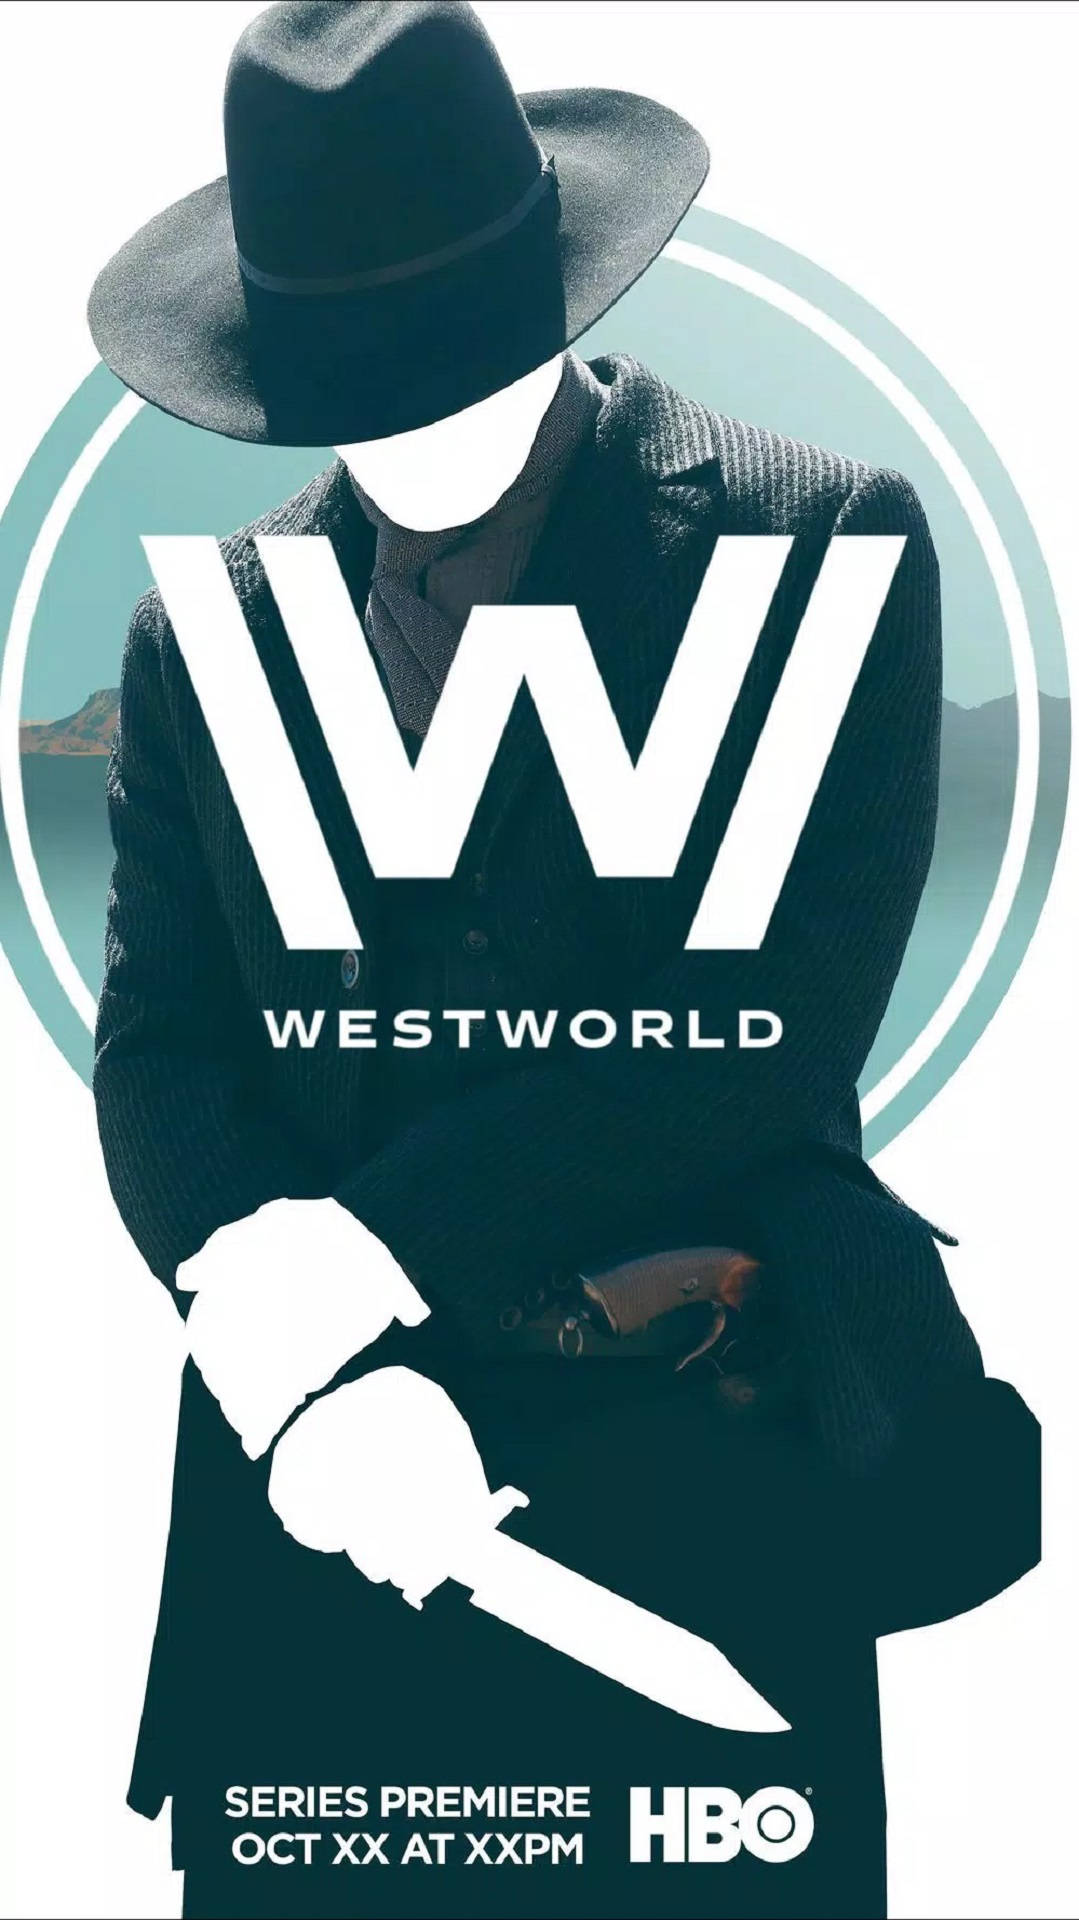 Westworld Wallpaper